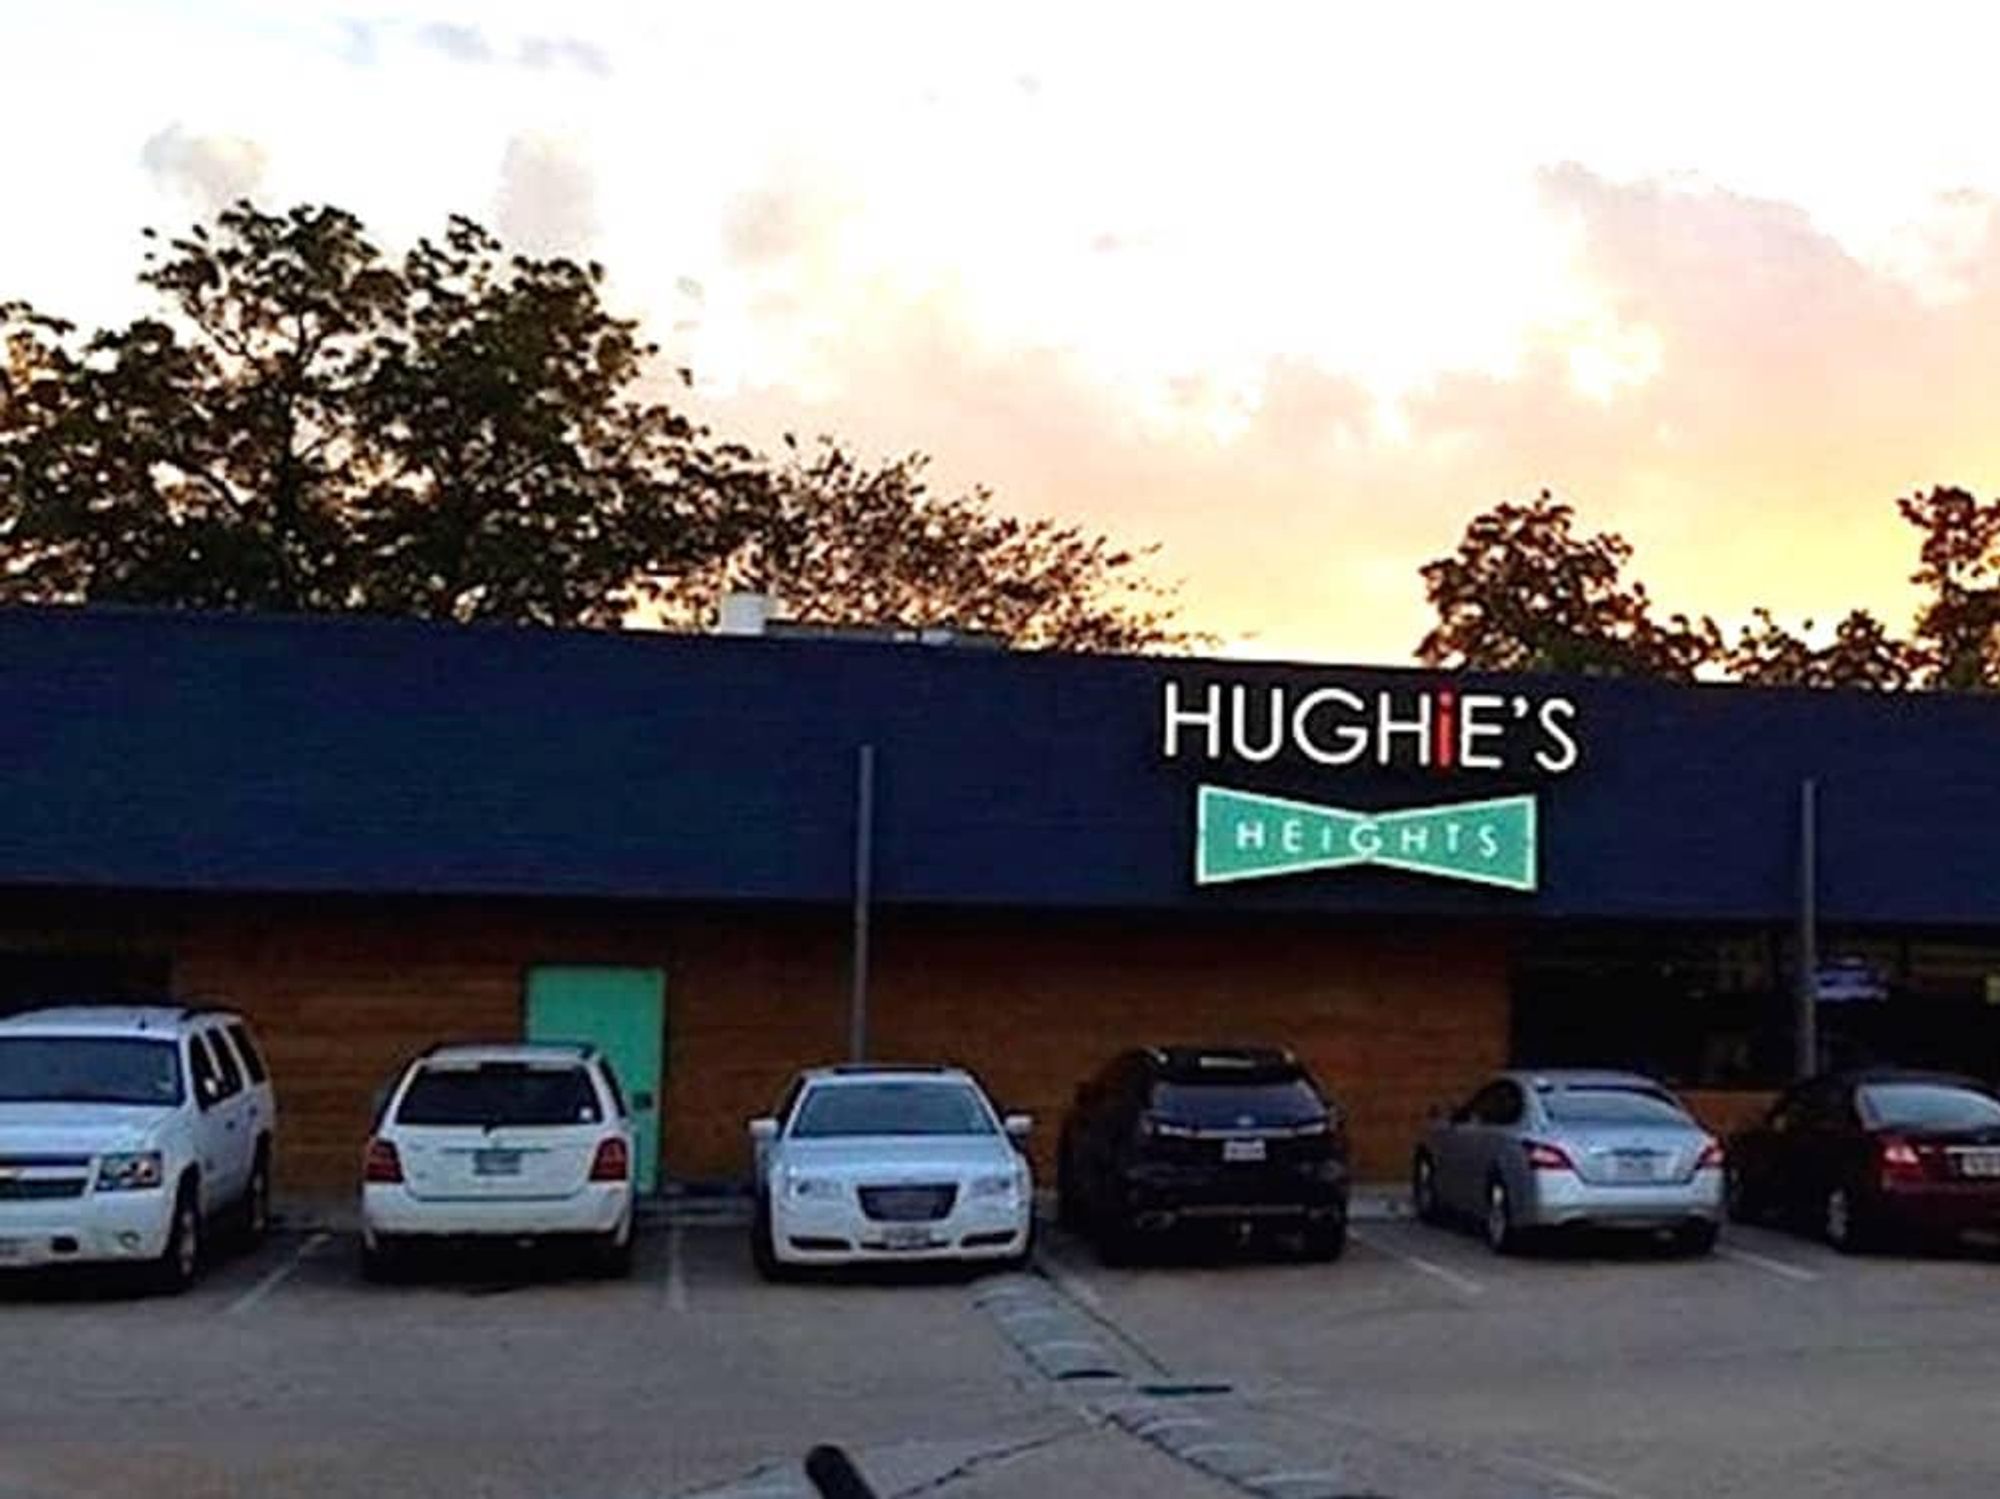 Hughie's Heights exterior